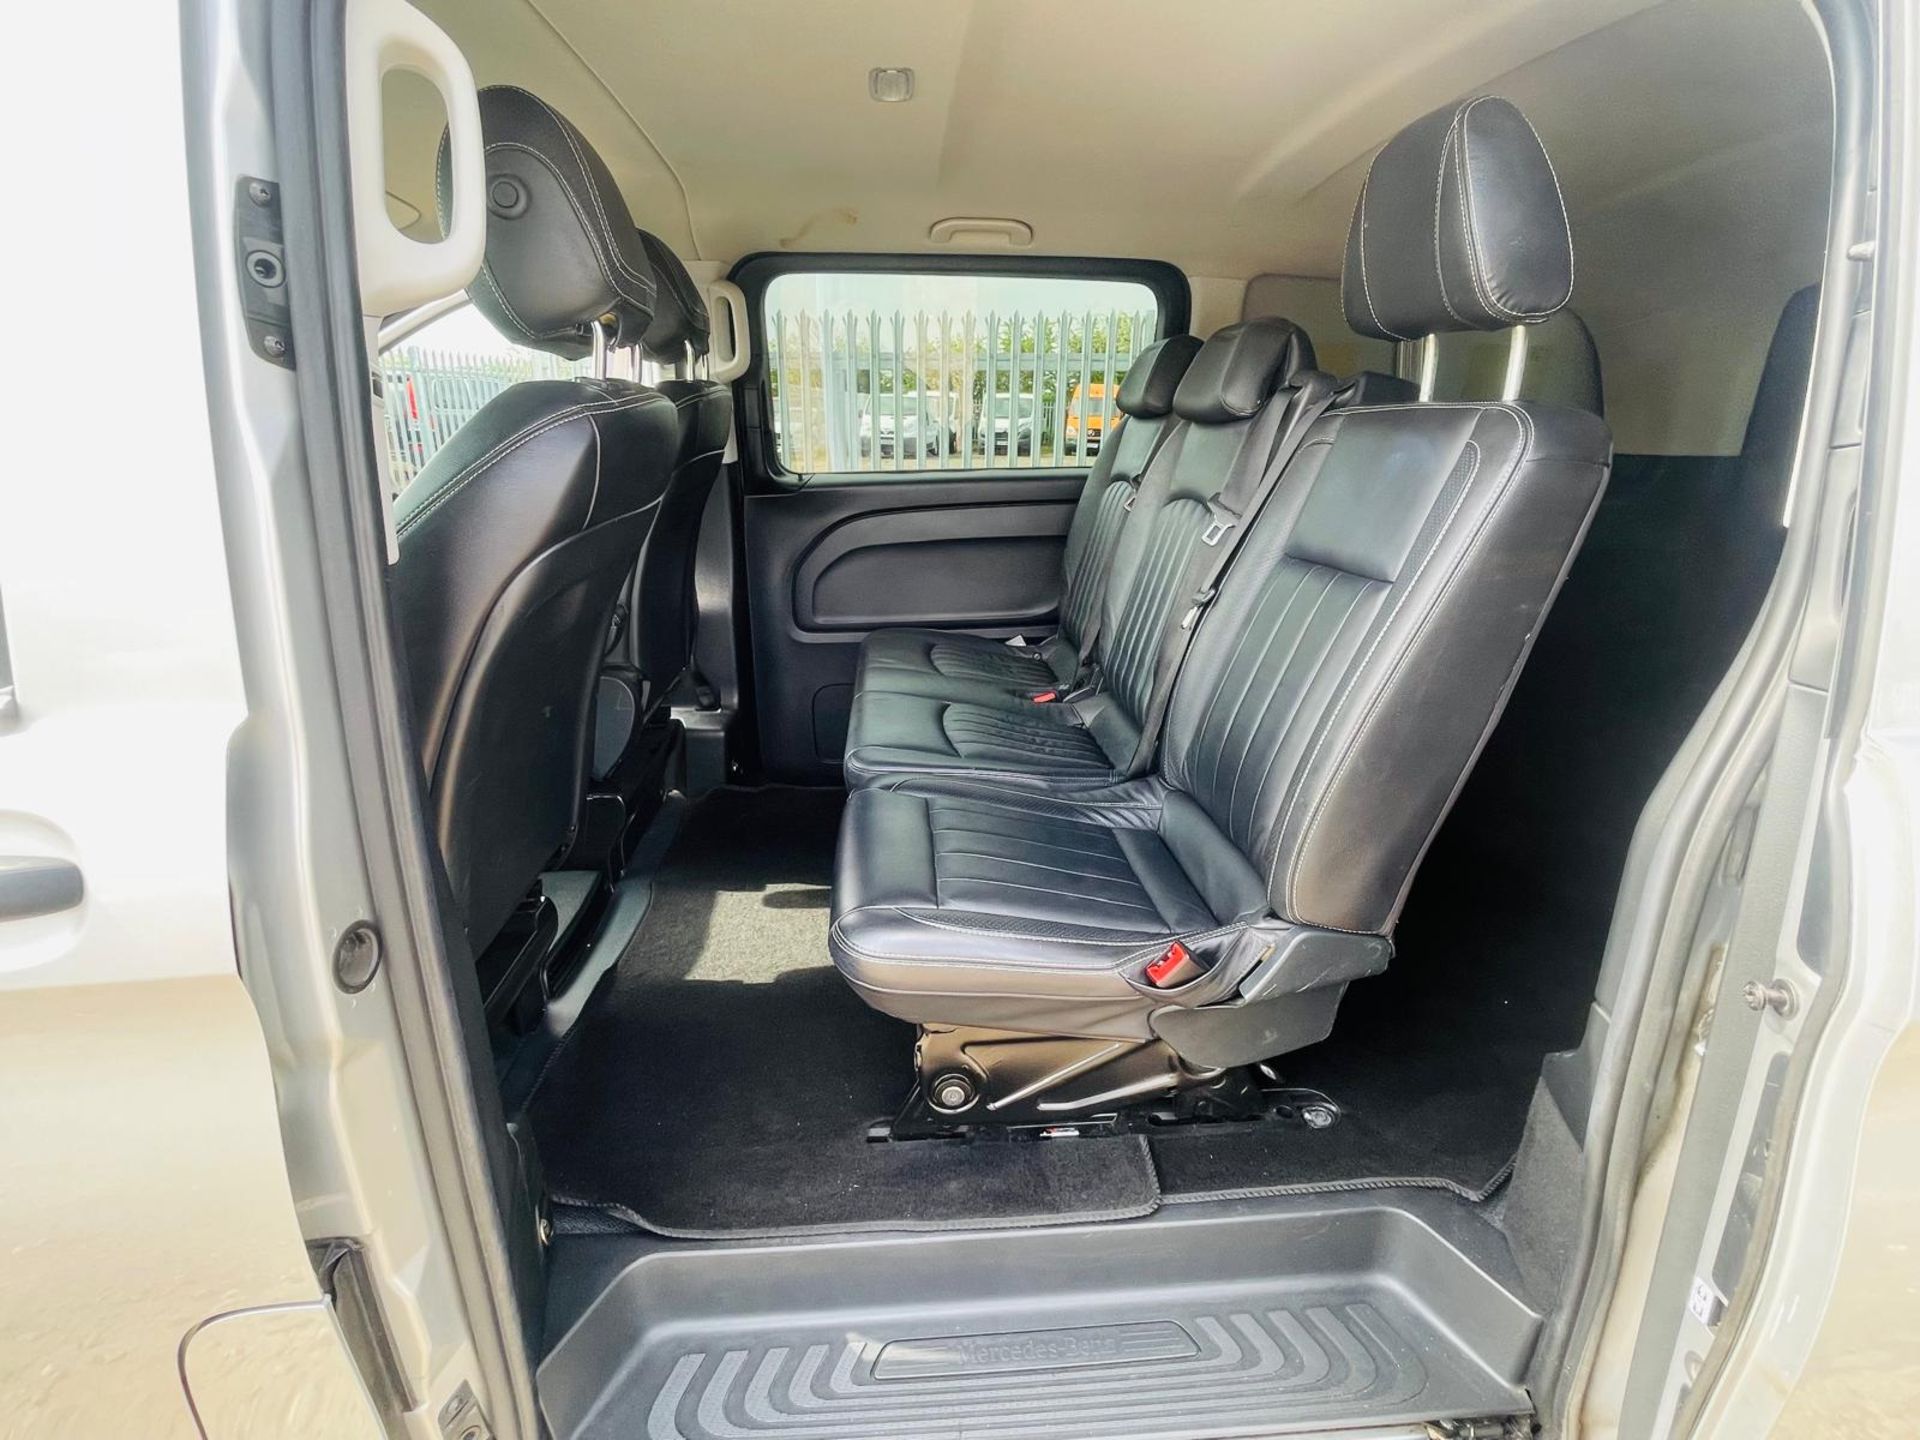 Mercedes-Benz Vito Premium 2.1 119 CDI 7G Tronic Crew Cab LWB Automatic 2019'19 Reg'- Alloy Wheels - Image 24 of 31